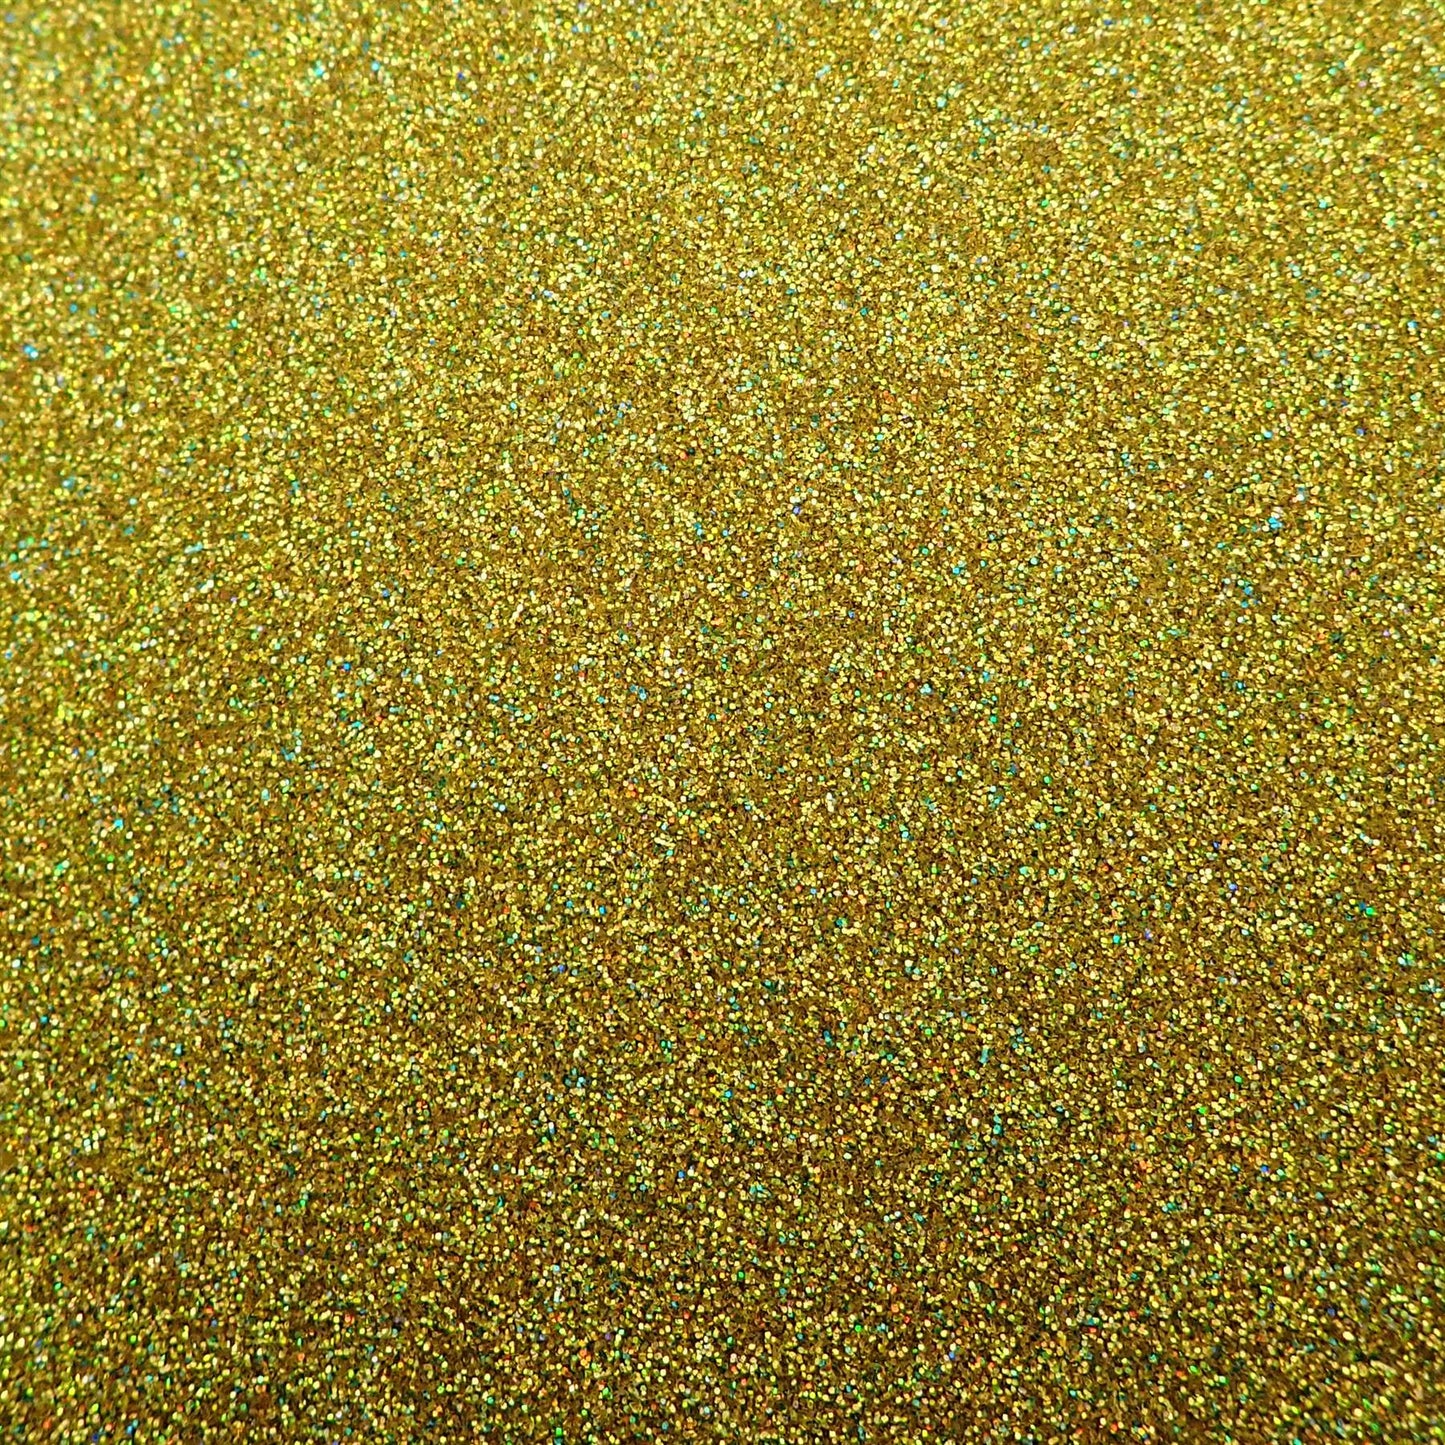 dartfords Gold Holographic Metal Flake 100g 0.008